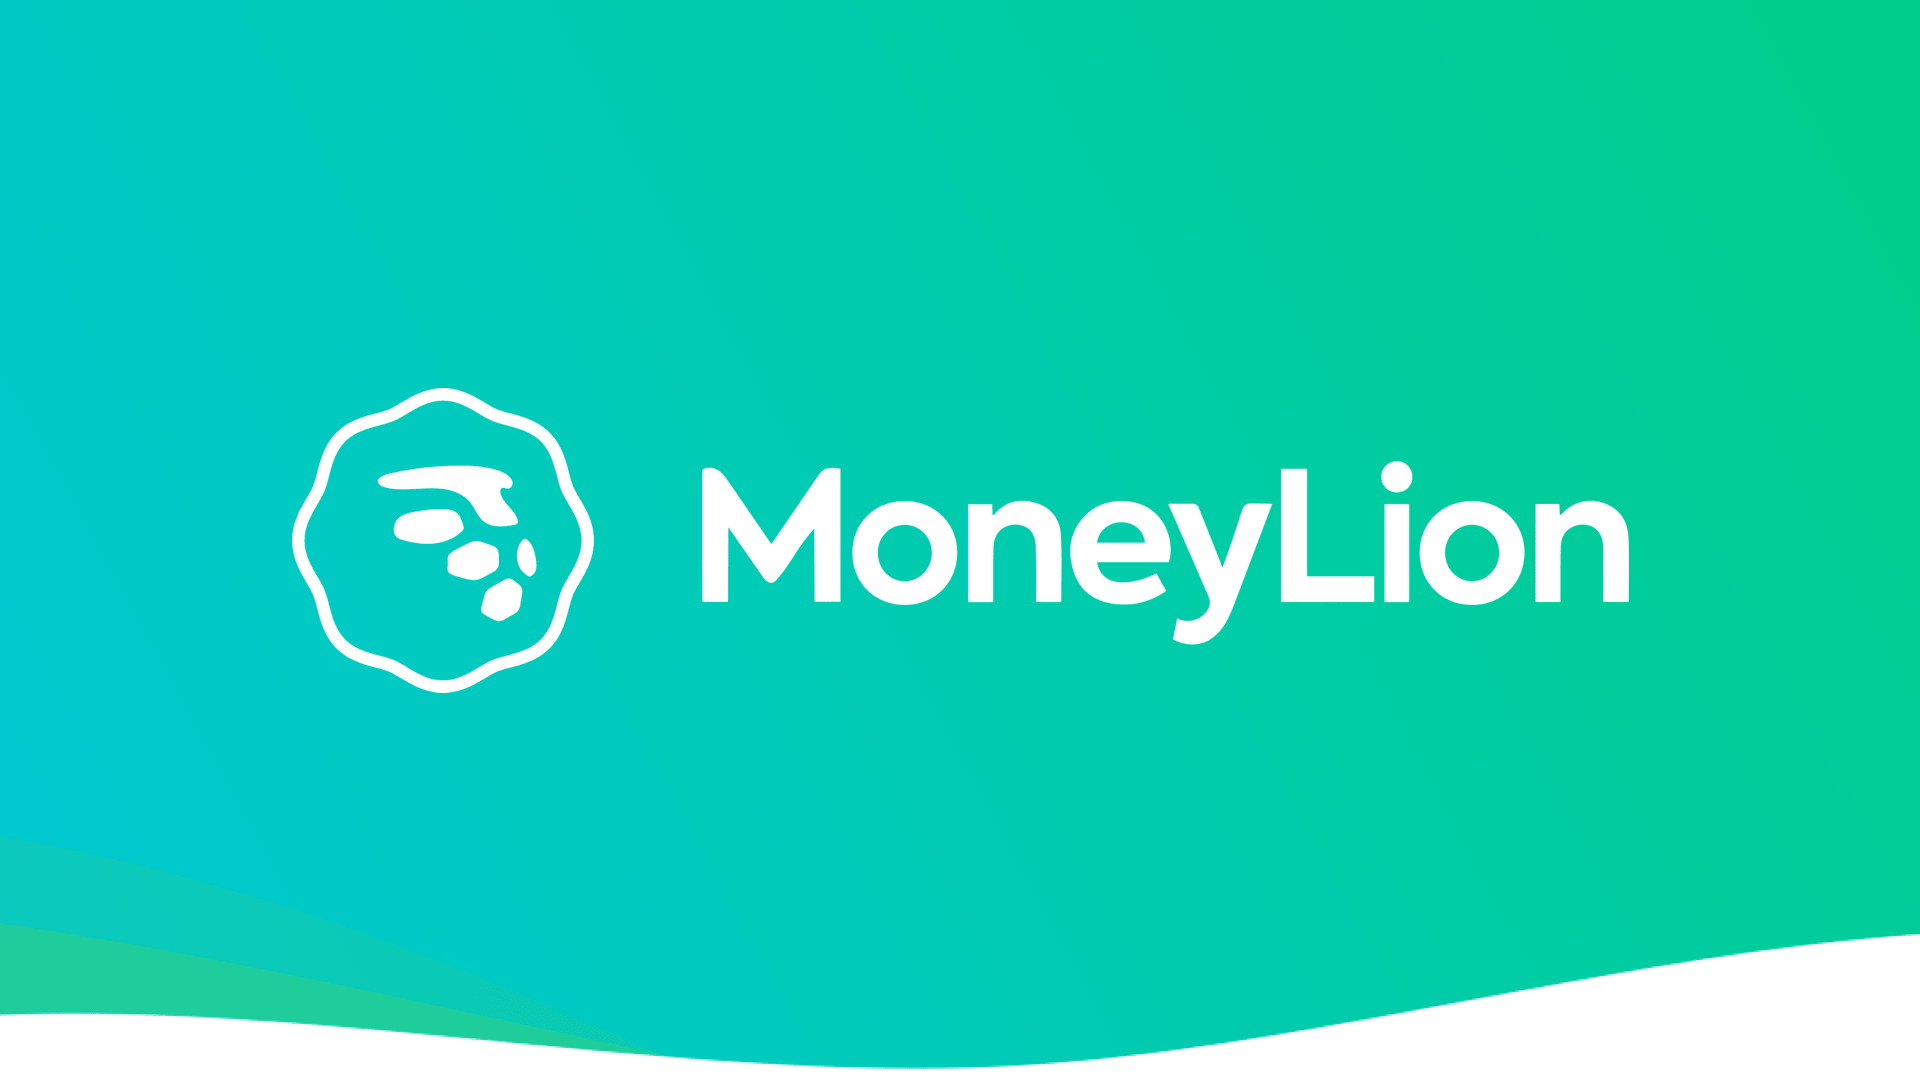 MoneyLion App Review [2021]- Requirements, Interest, Payment Schedule, Contacts